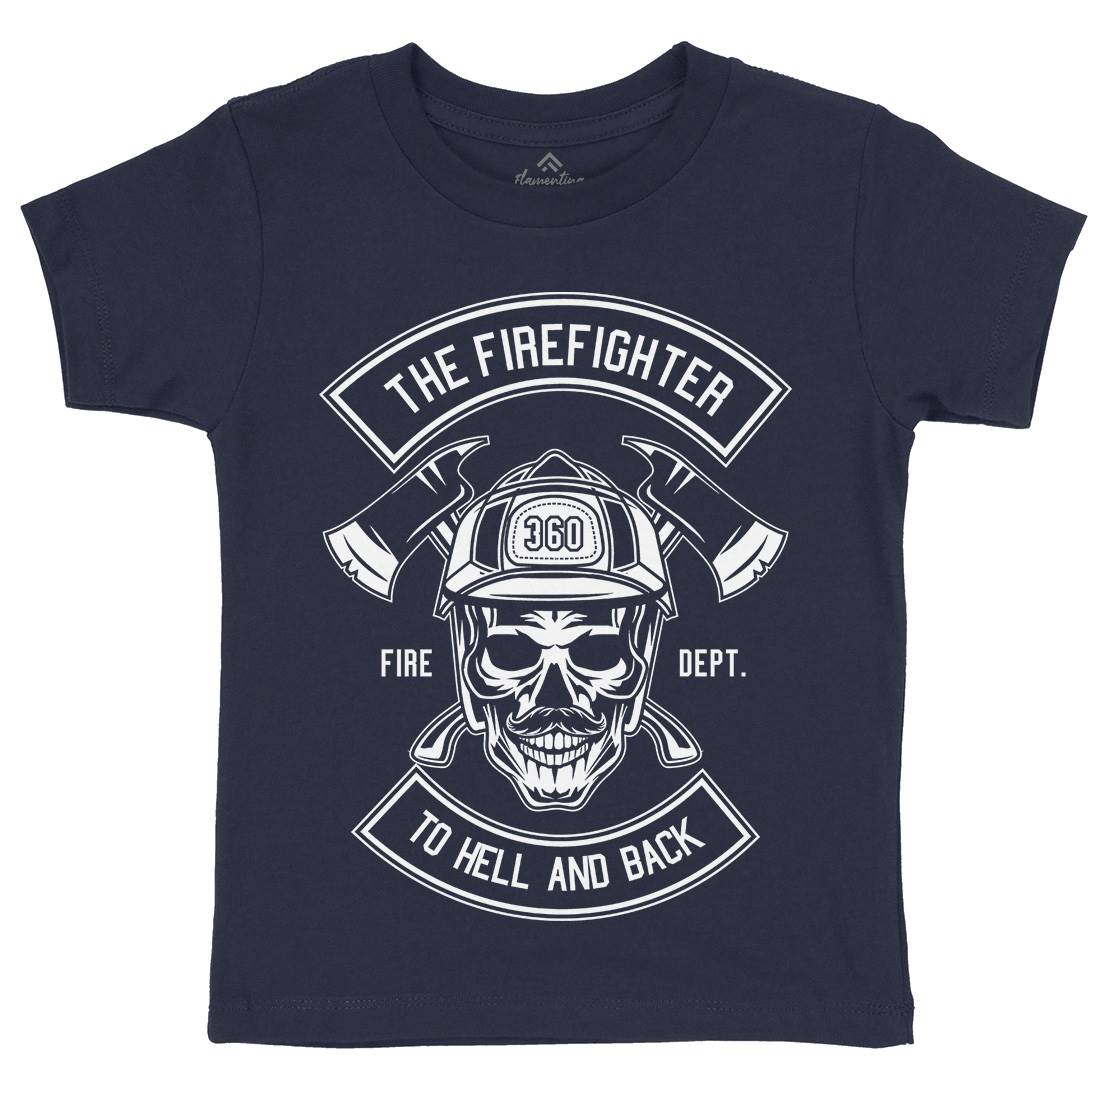 The Fire Fighter Kids Crew Neck T-Shirt Firefighters B651